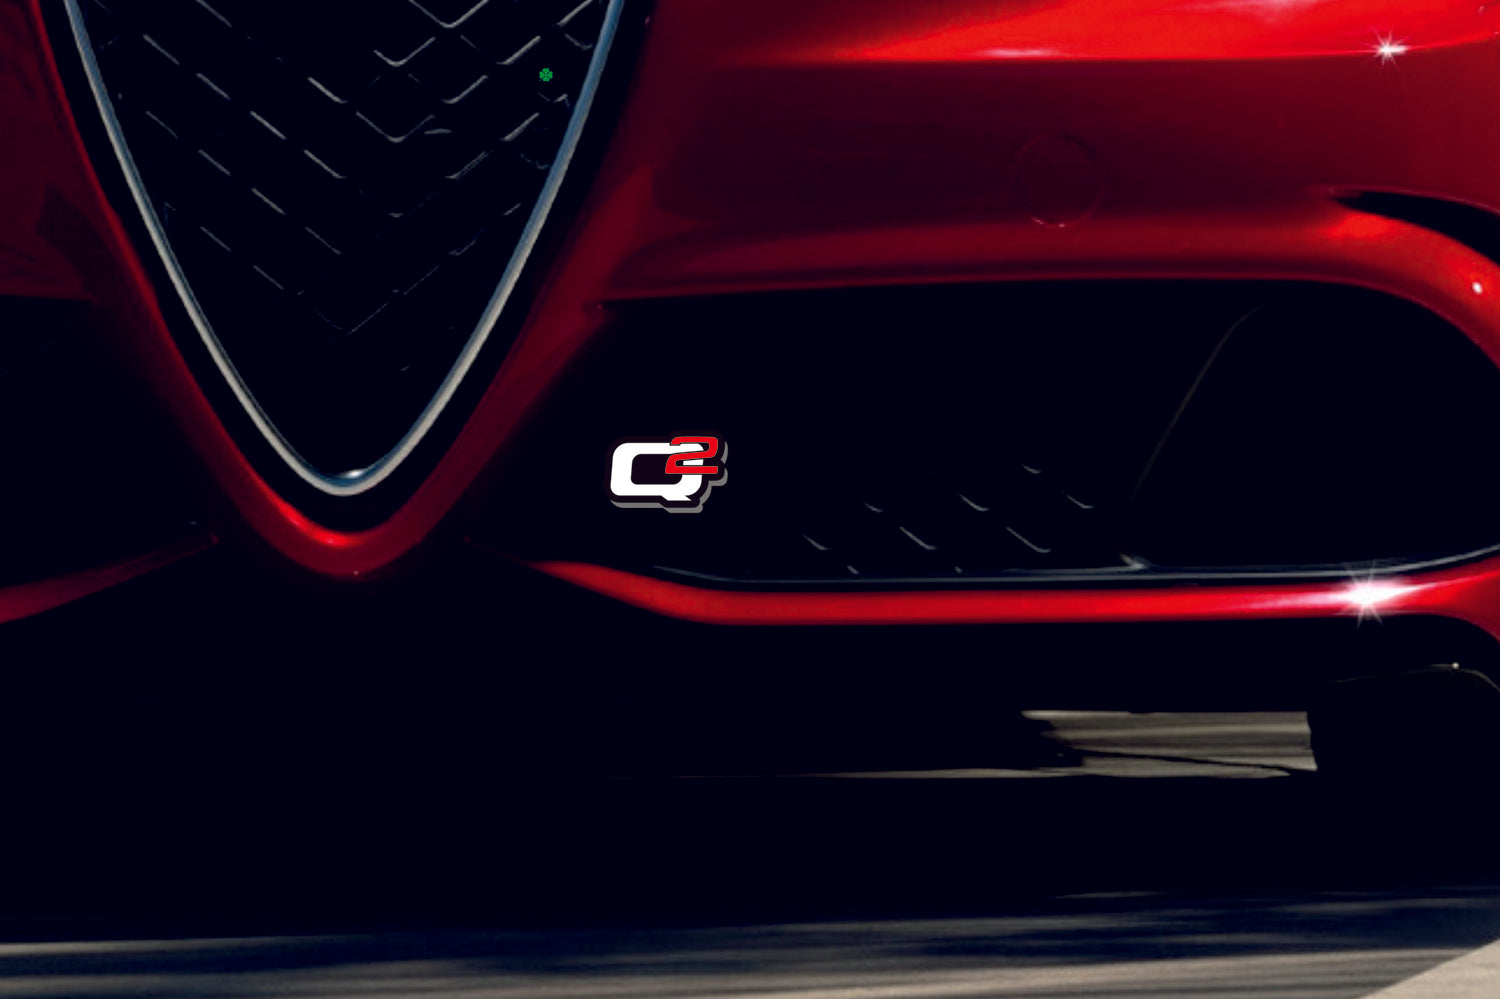 Alfa Romeo Radiator grille emblem with Q2 logo